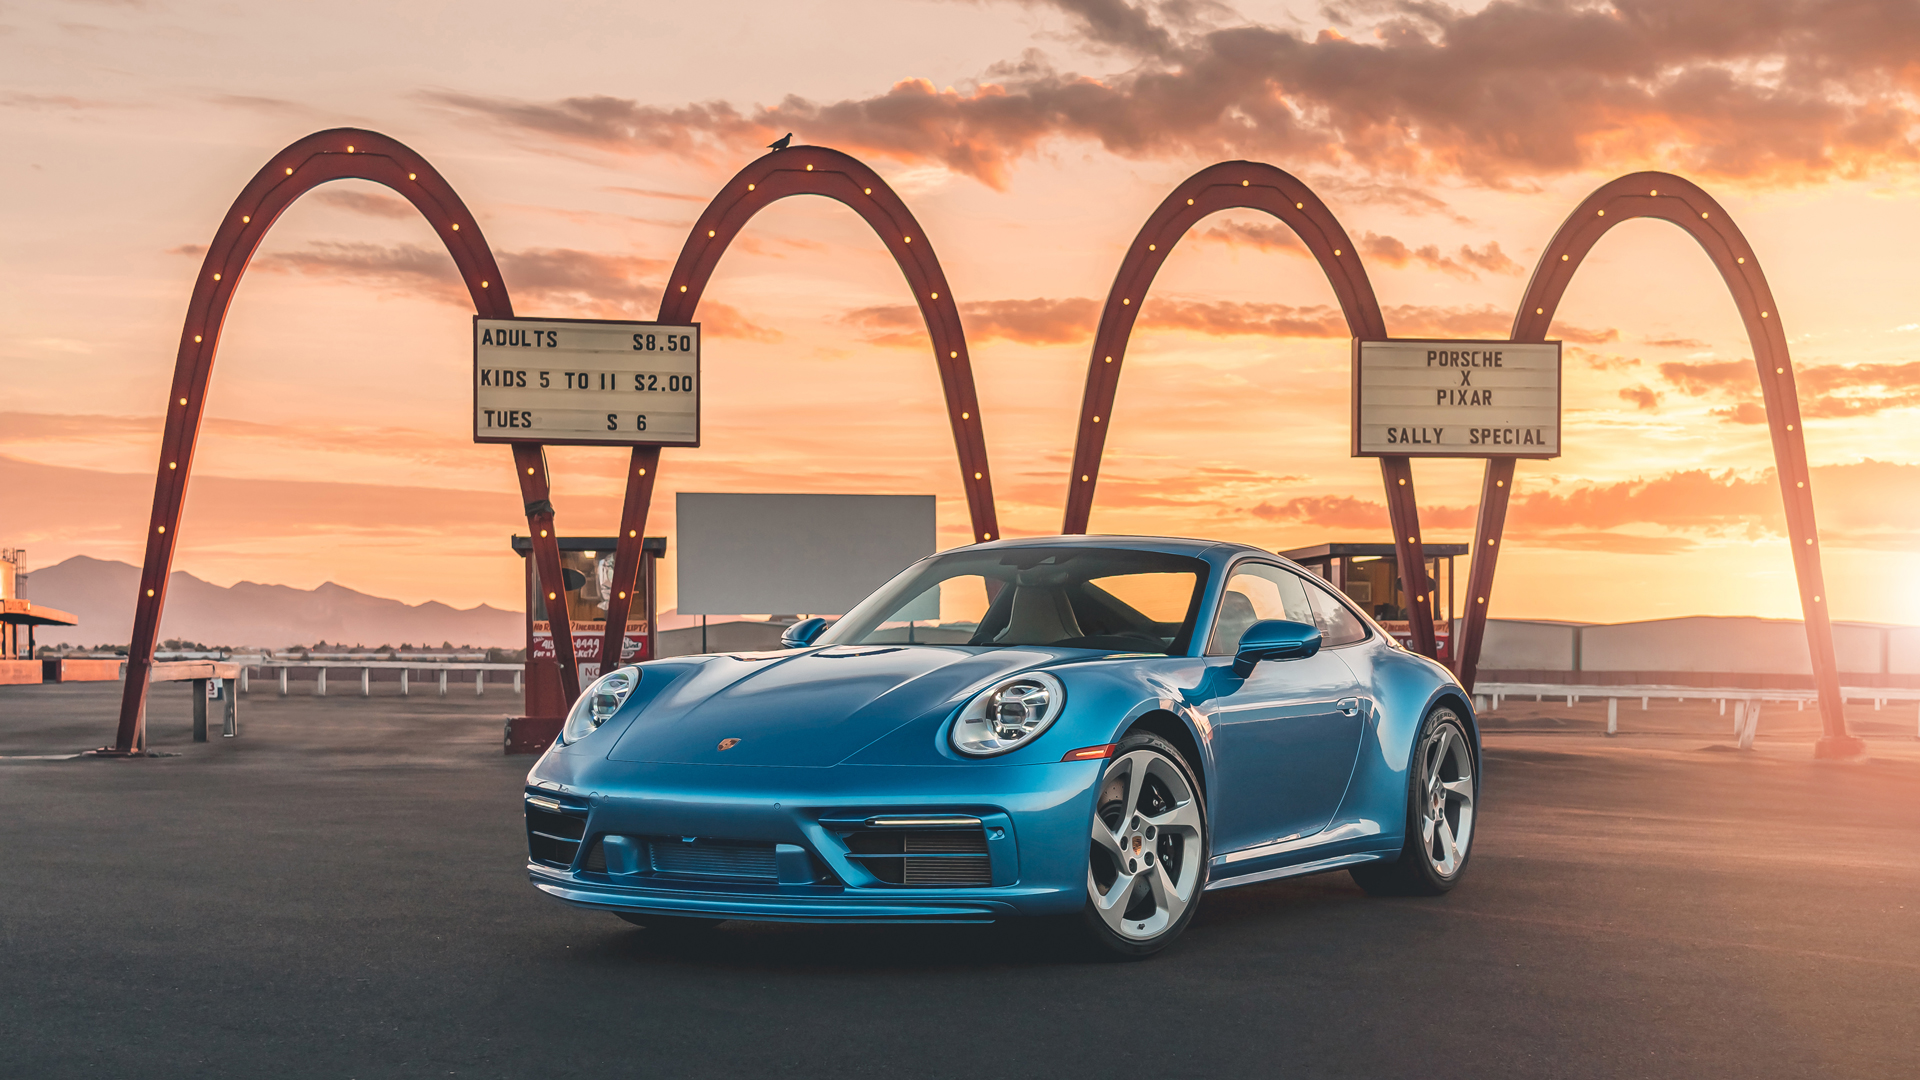 Porsche-911-Sally-Special-asta-3.6-milioni-dollari-Robb-Report-Italia